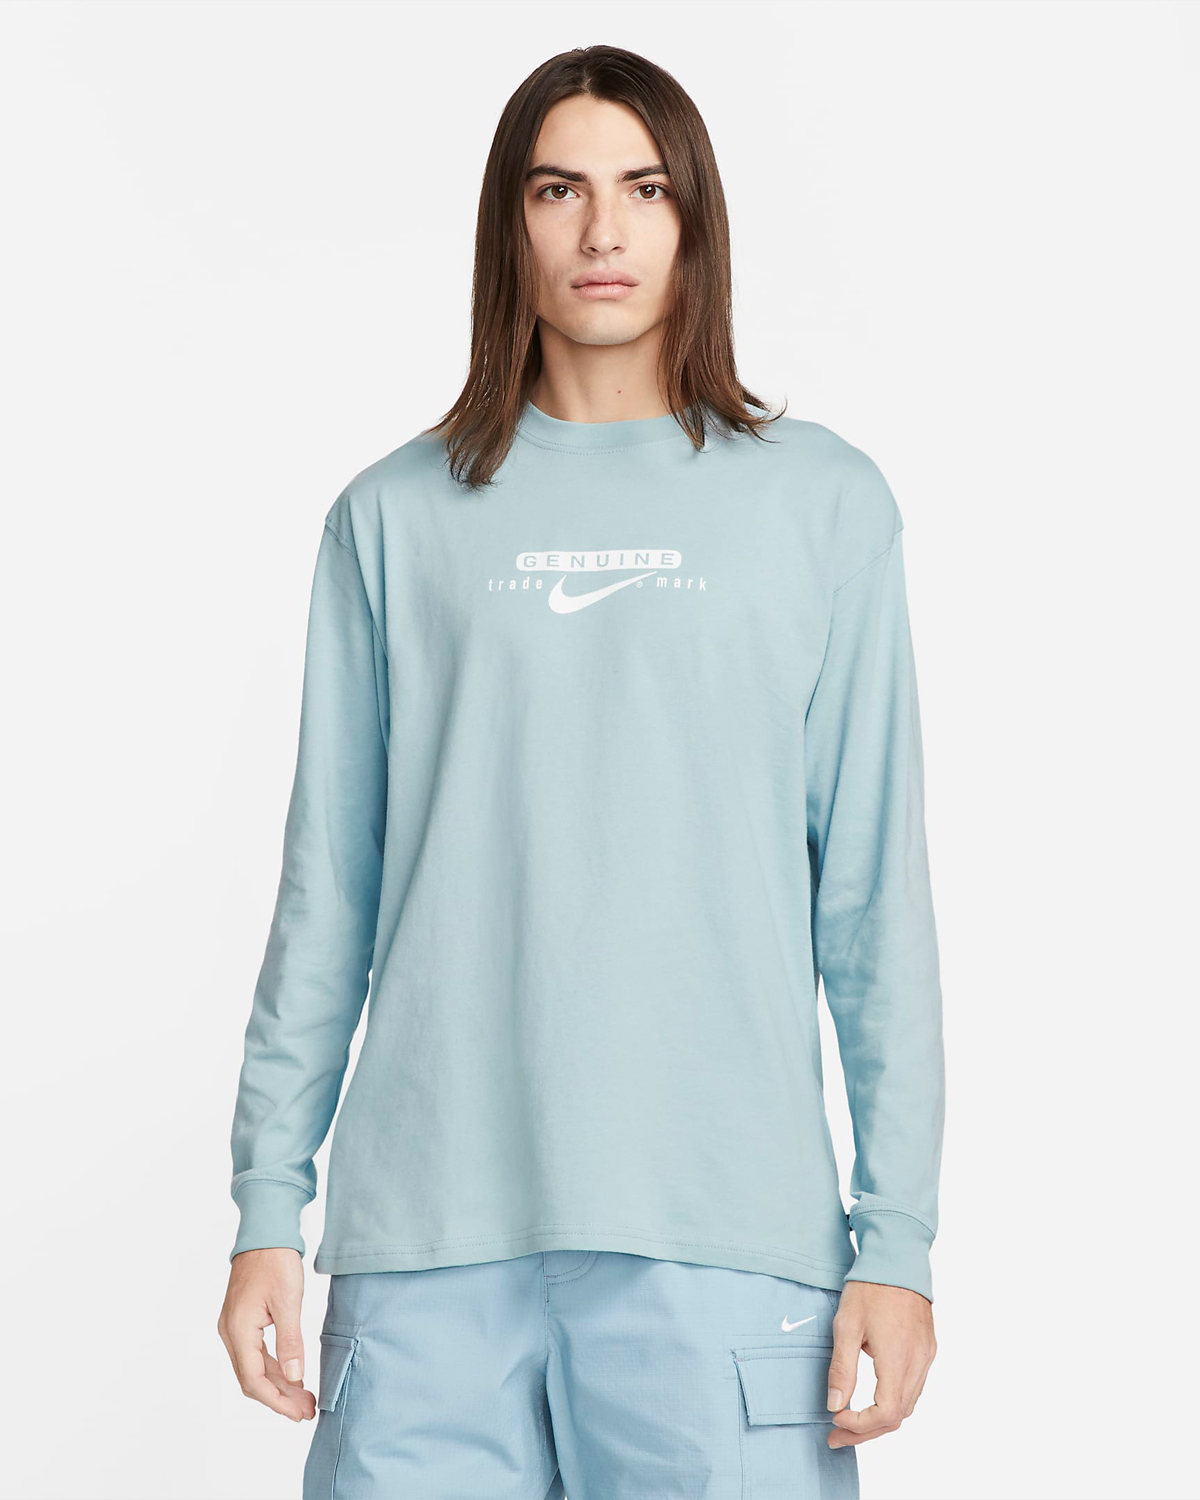 Nike-SB-Long-Sleeve-T-Shirt-Ocean-Bliss